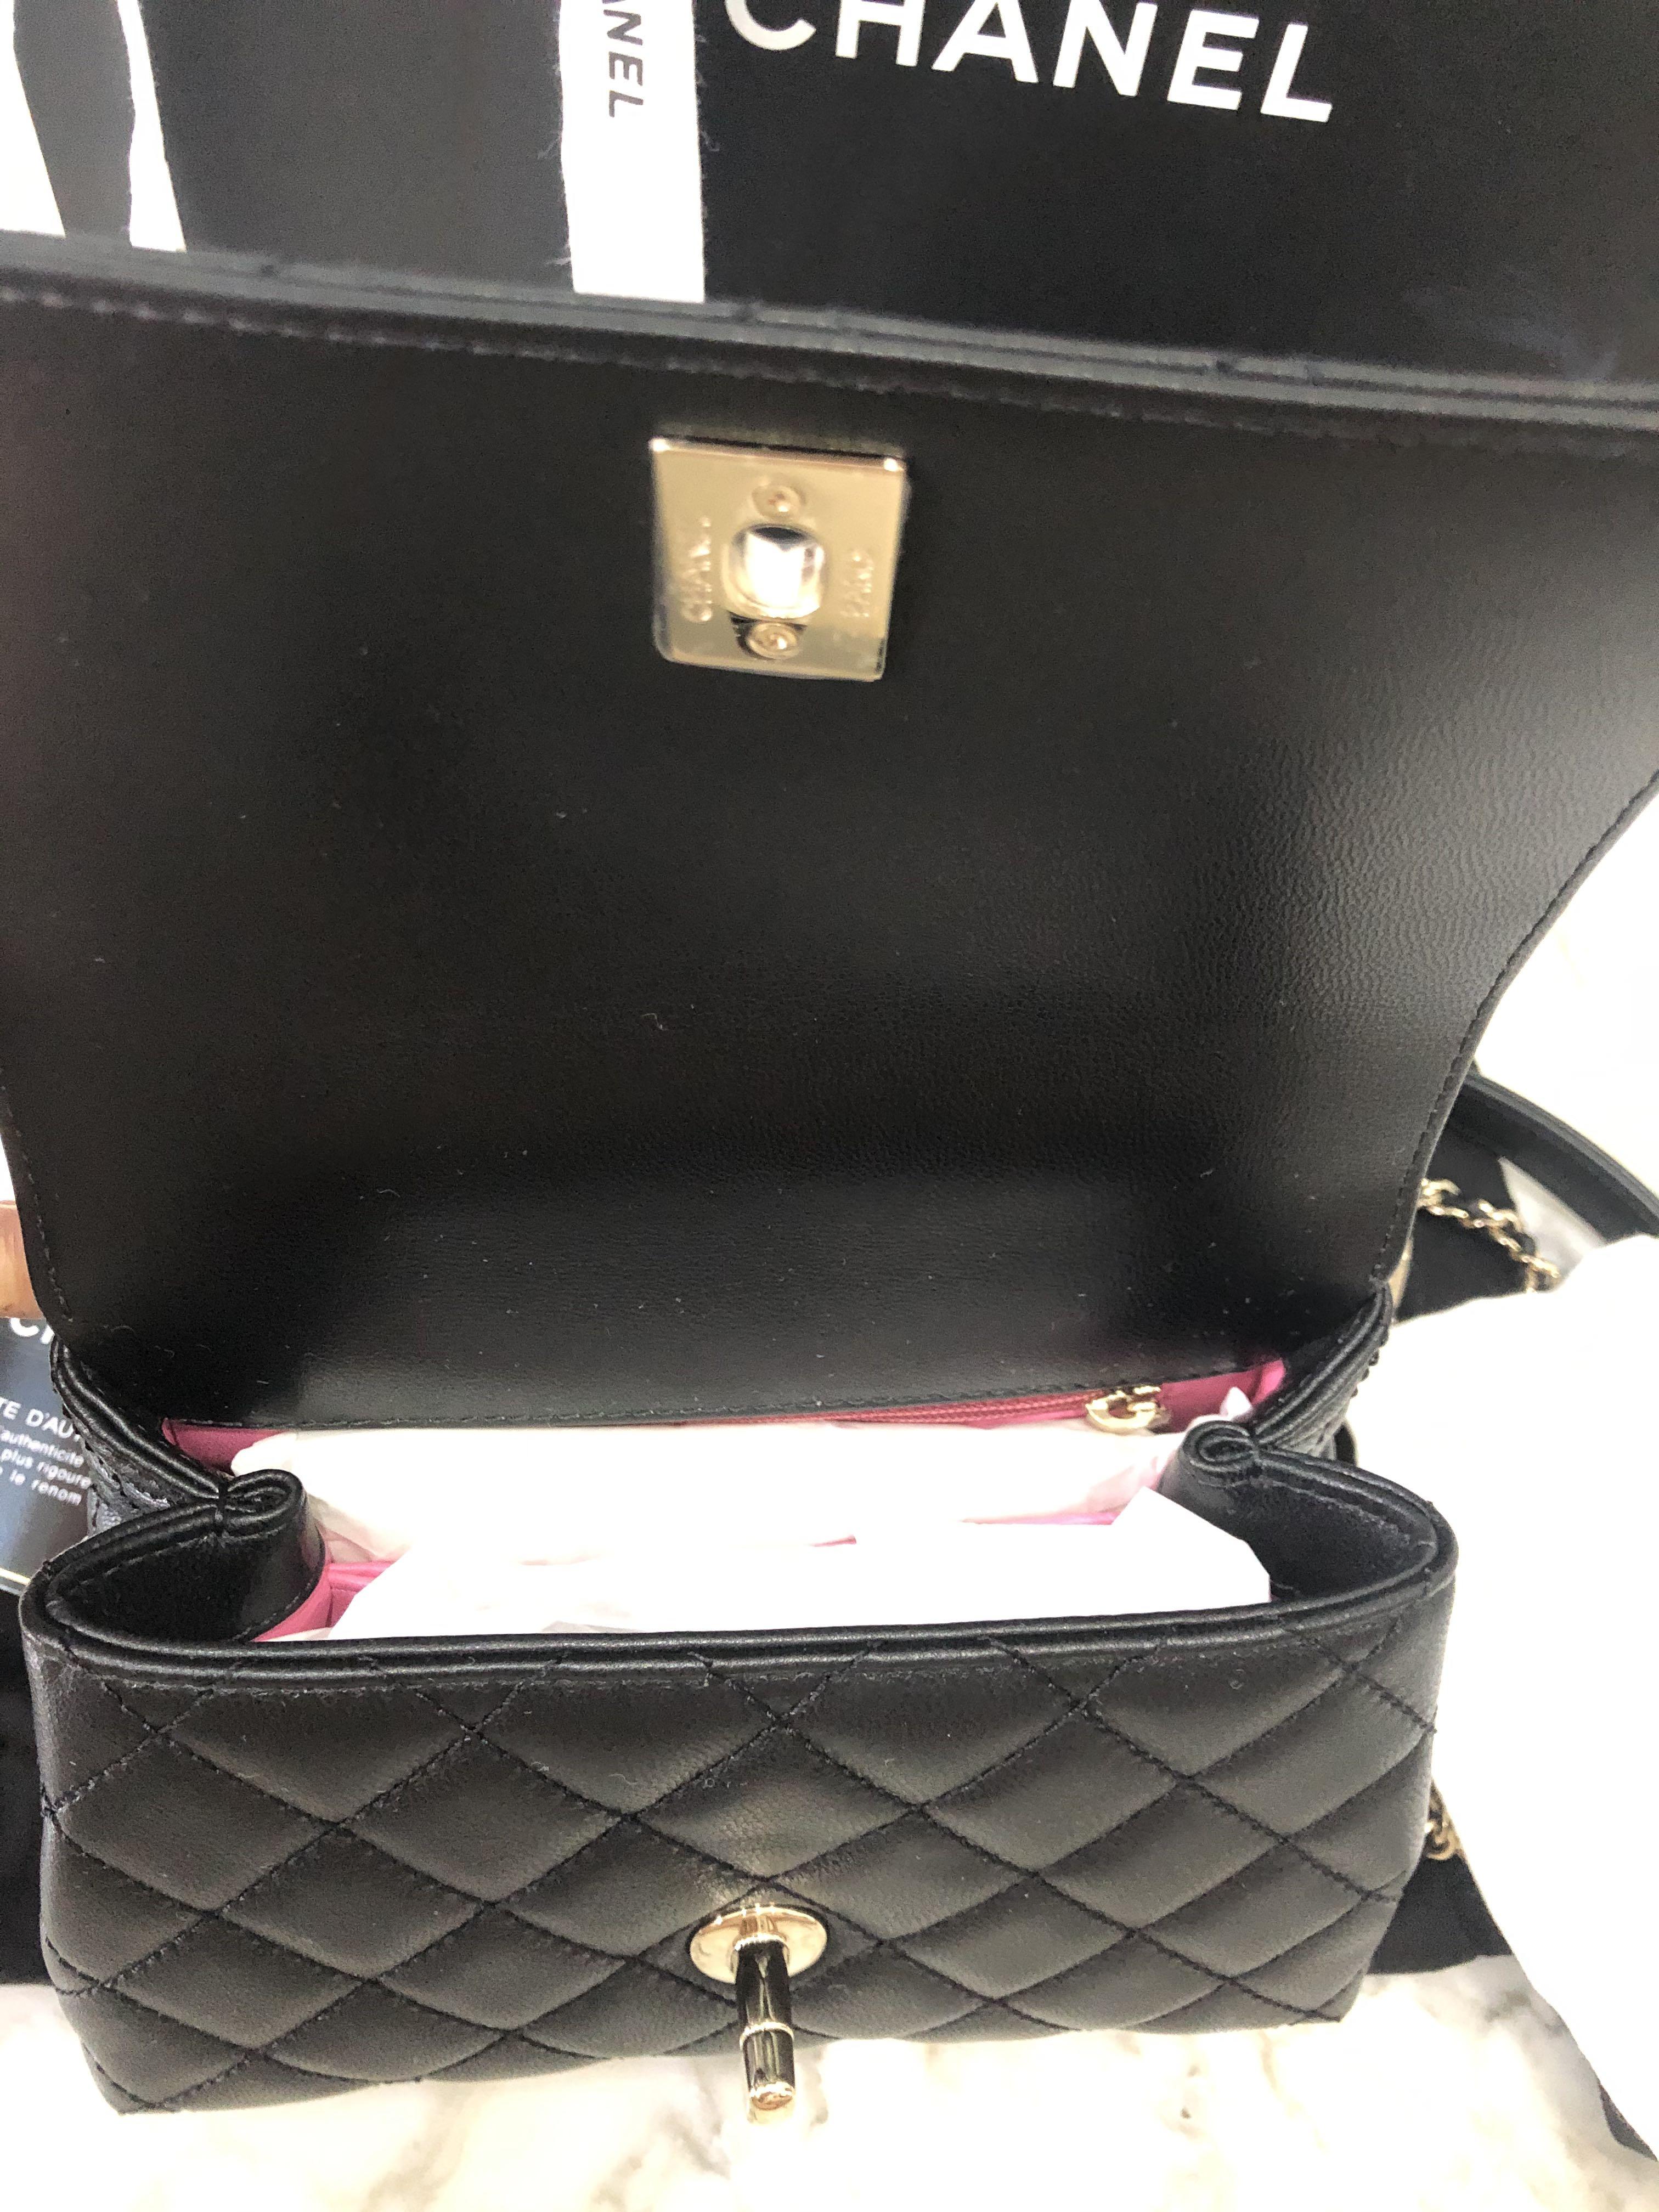 Chanel Extra Mini Coco Handle Bag - Black Handle Bags, Handbags - CHA896890